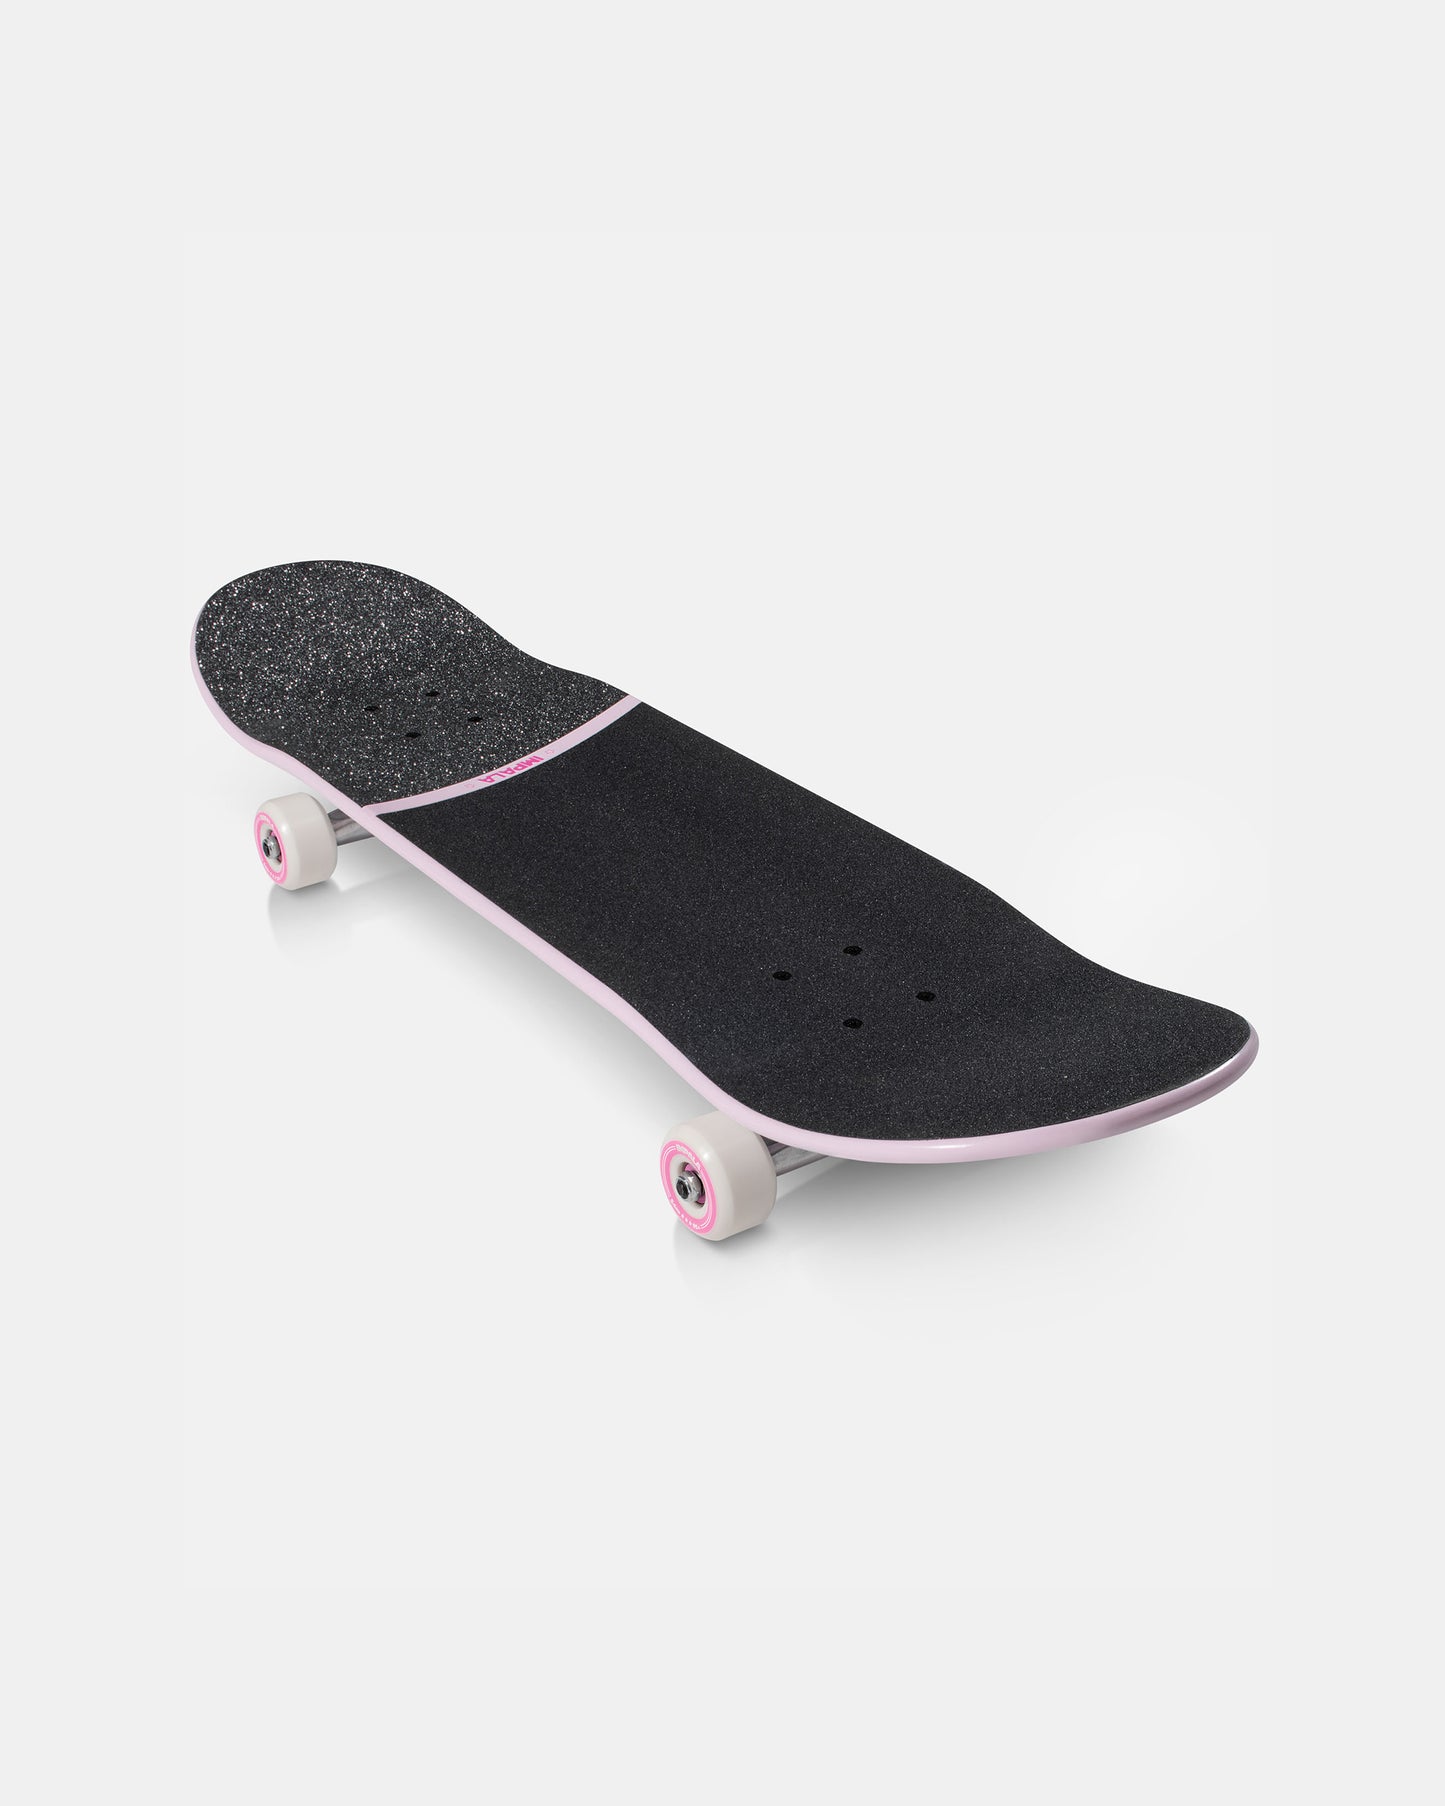 Impala Cosmos Skateboard - Pink 8.25” - Impala Rollerskates